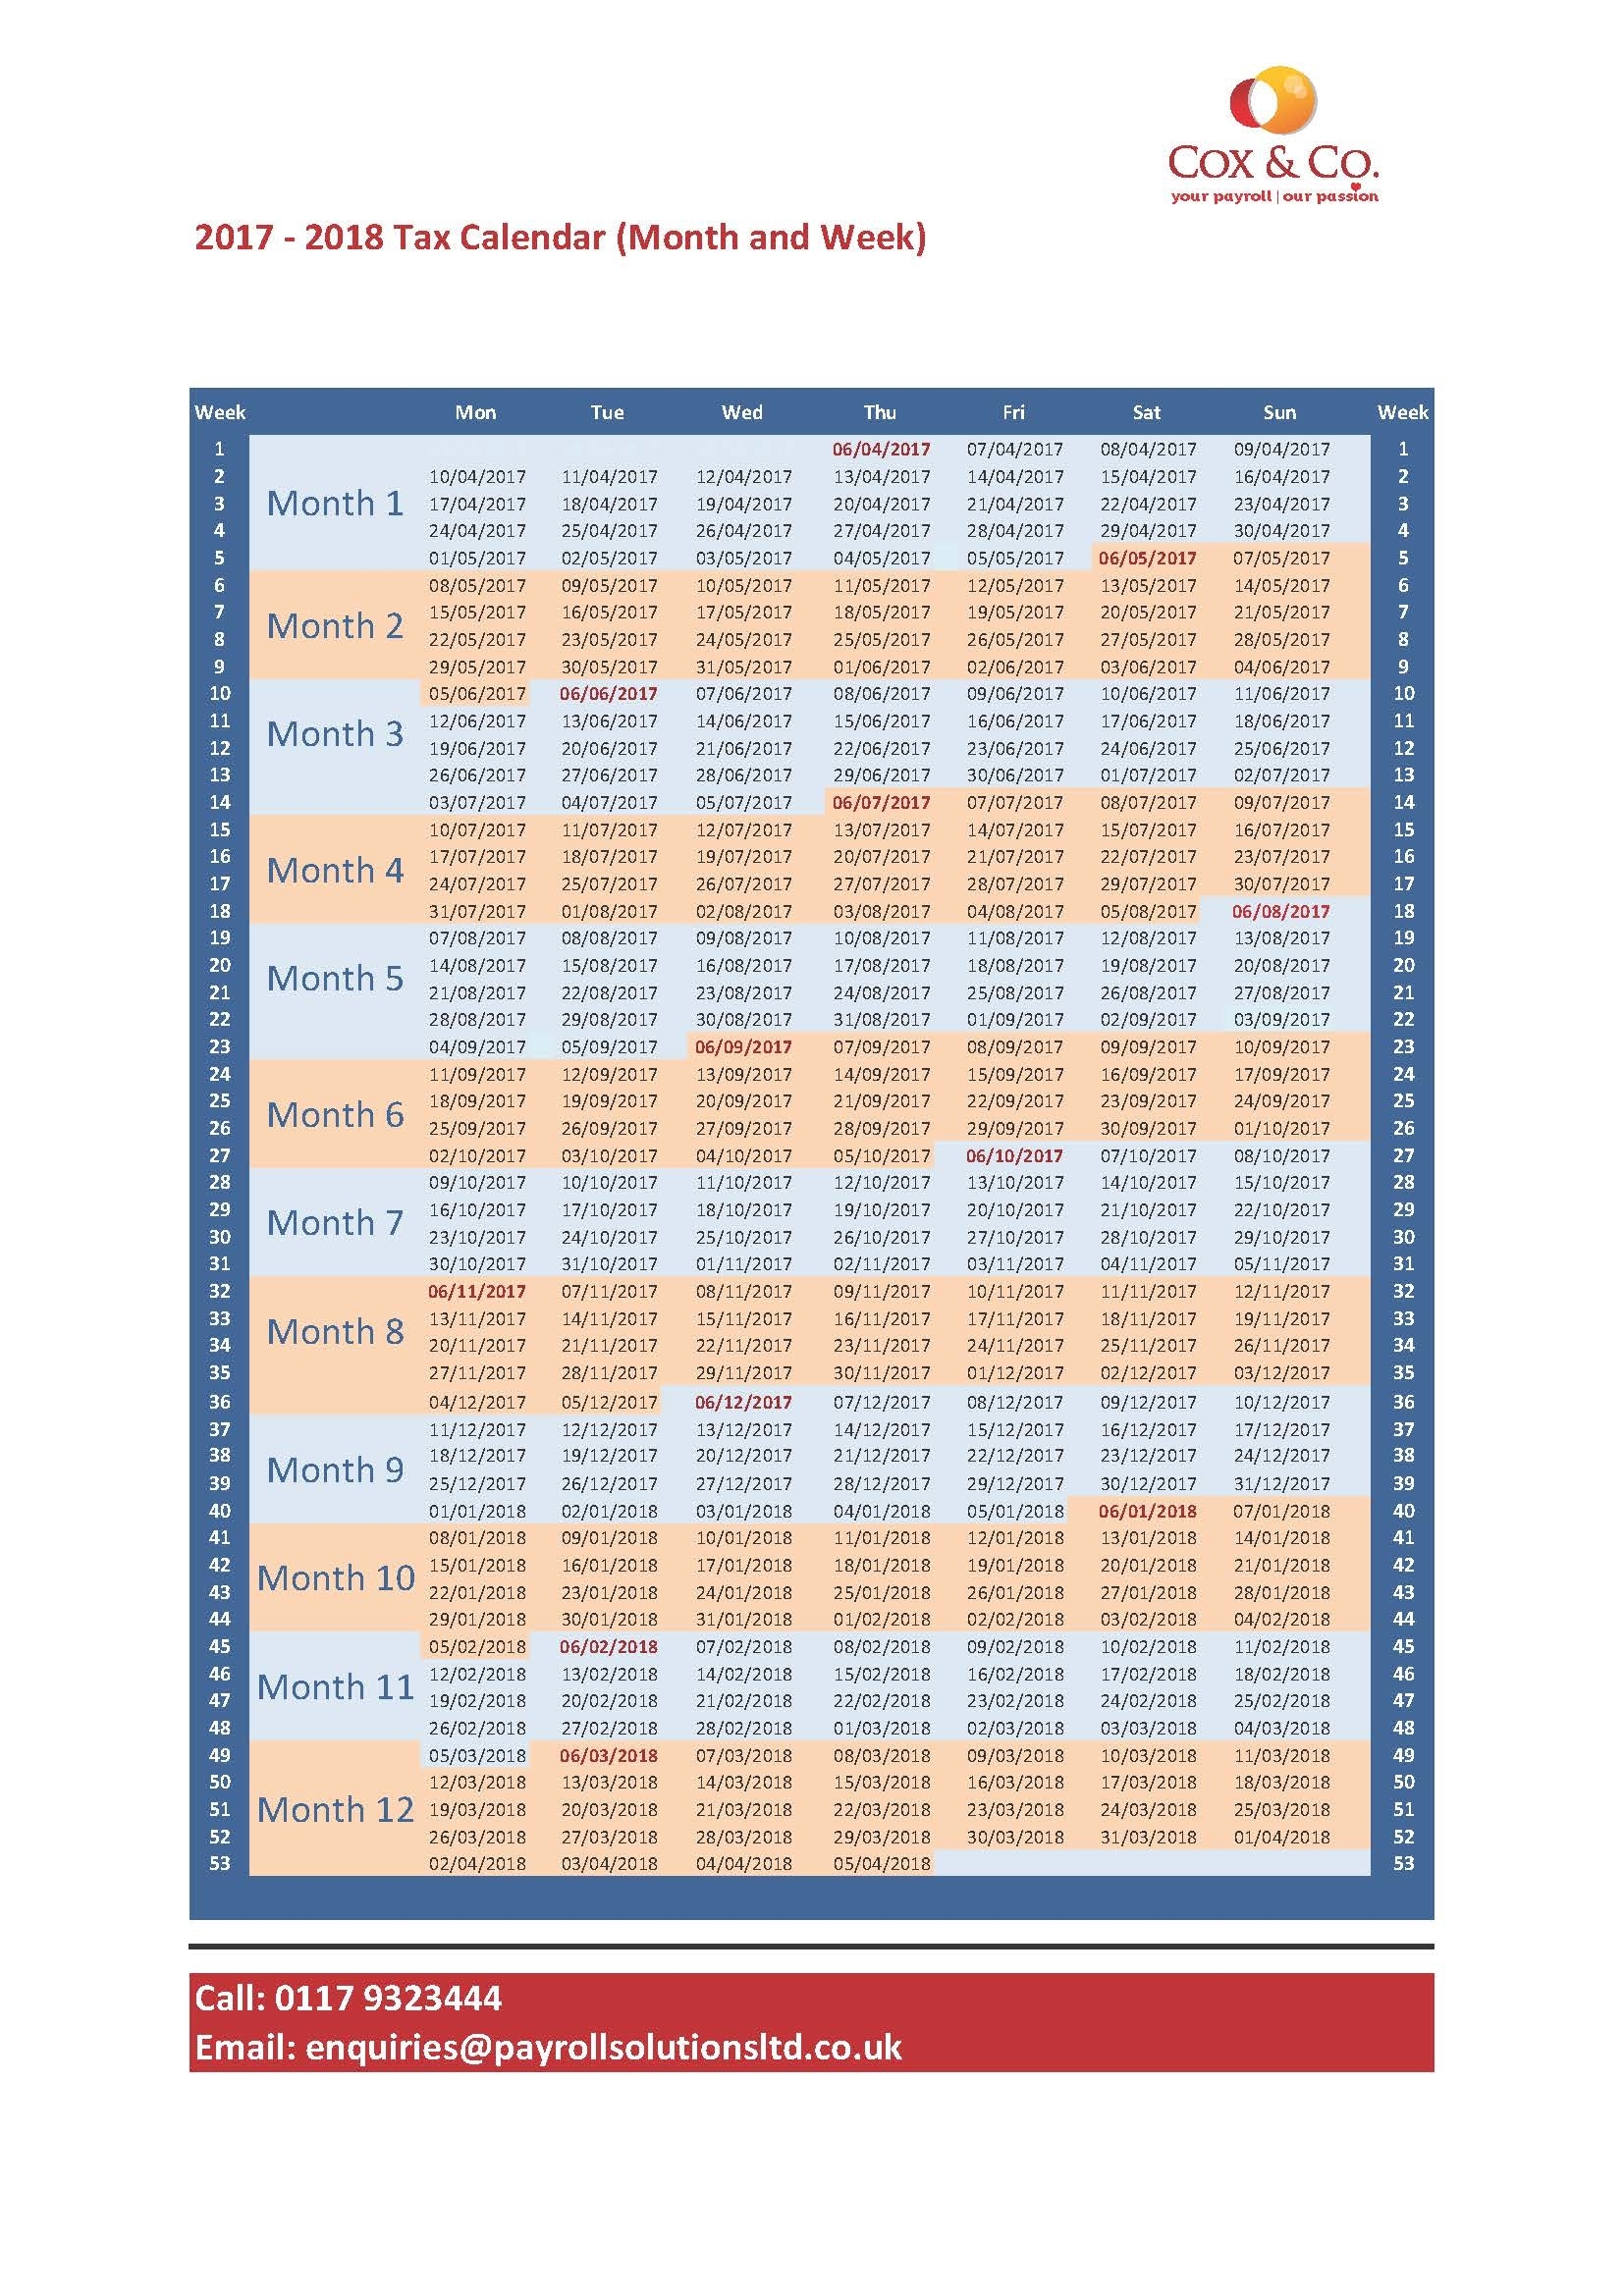 Free Tax Week &amp; Month Payroll Calendar - intended for Hmrc Tax Calendar 2019 2020